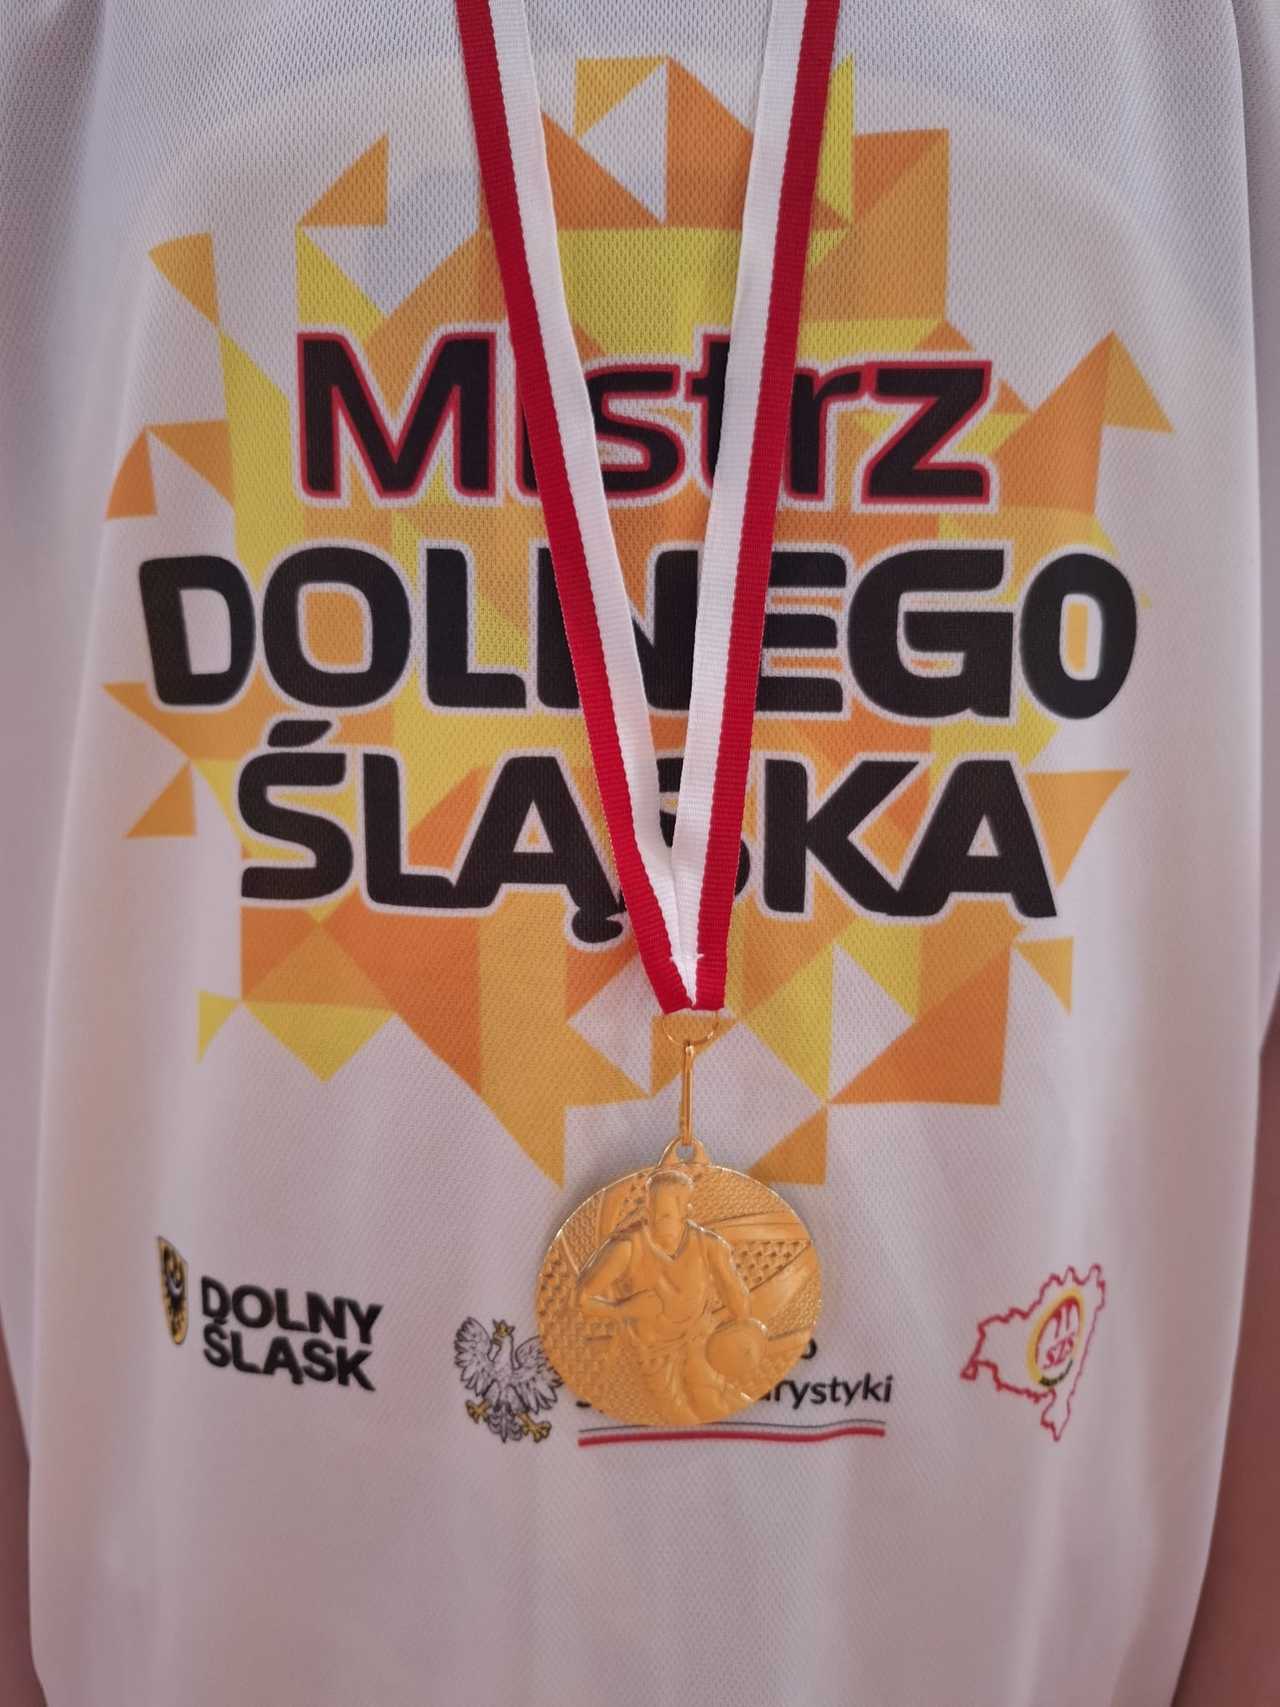 Piława Górna: We Are the Champions 